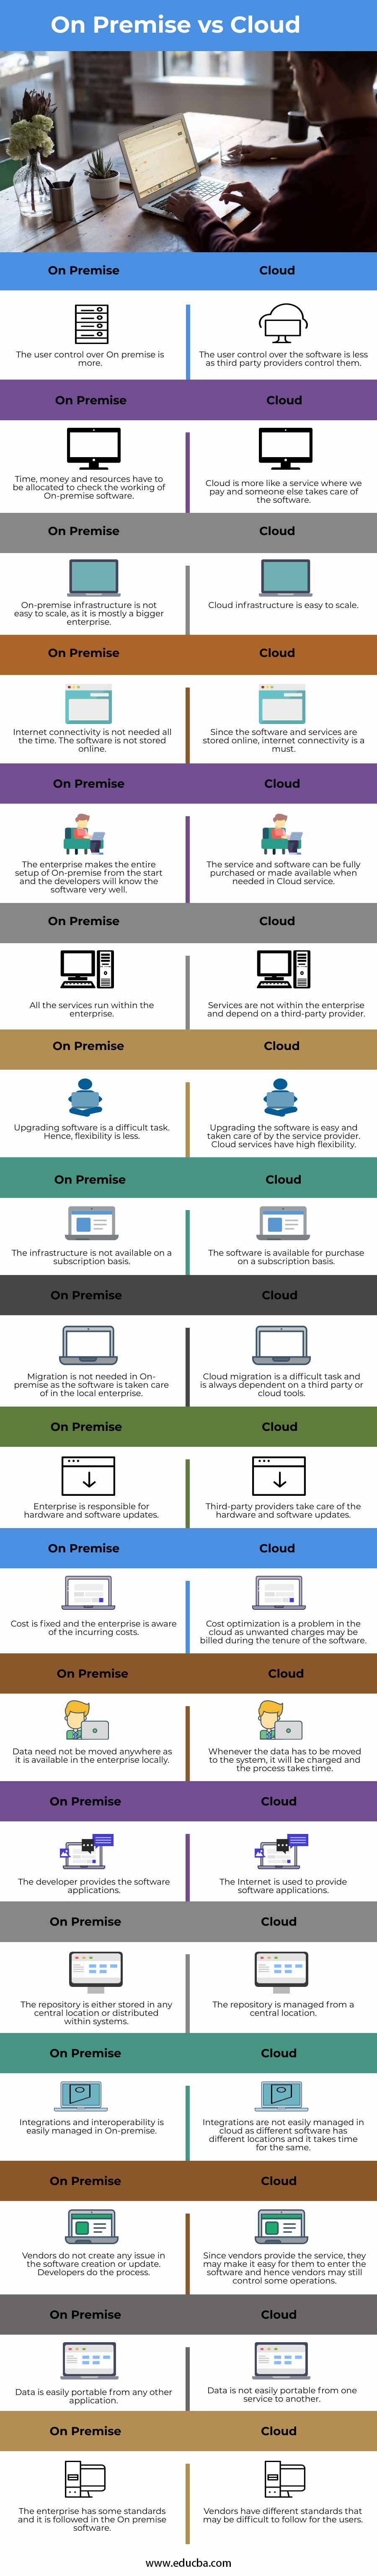 On Premise vs Cloud info